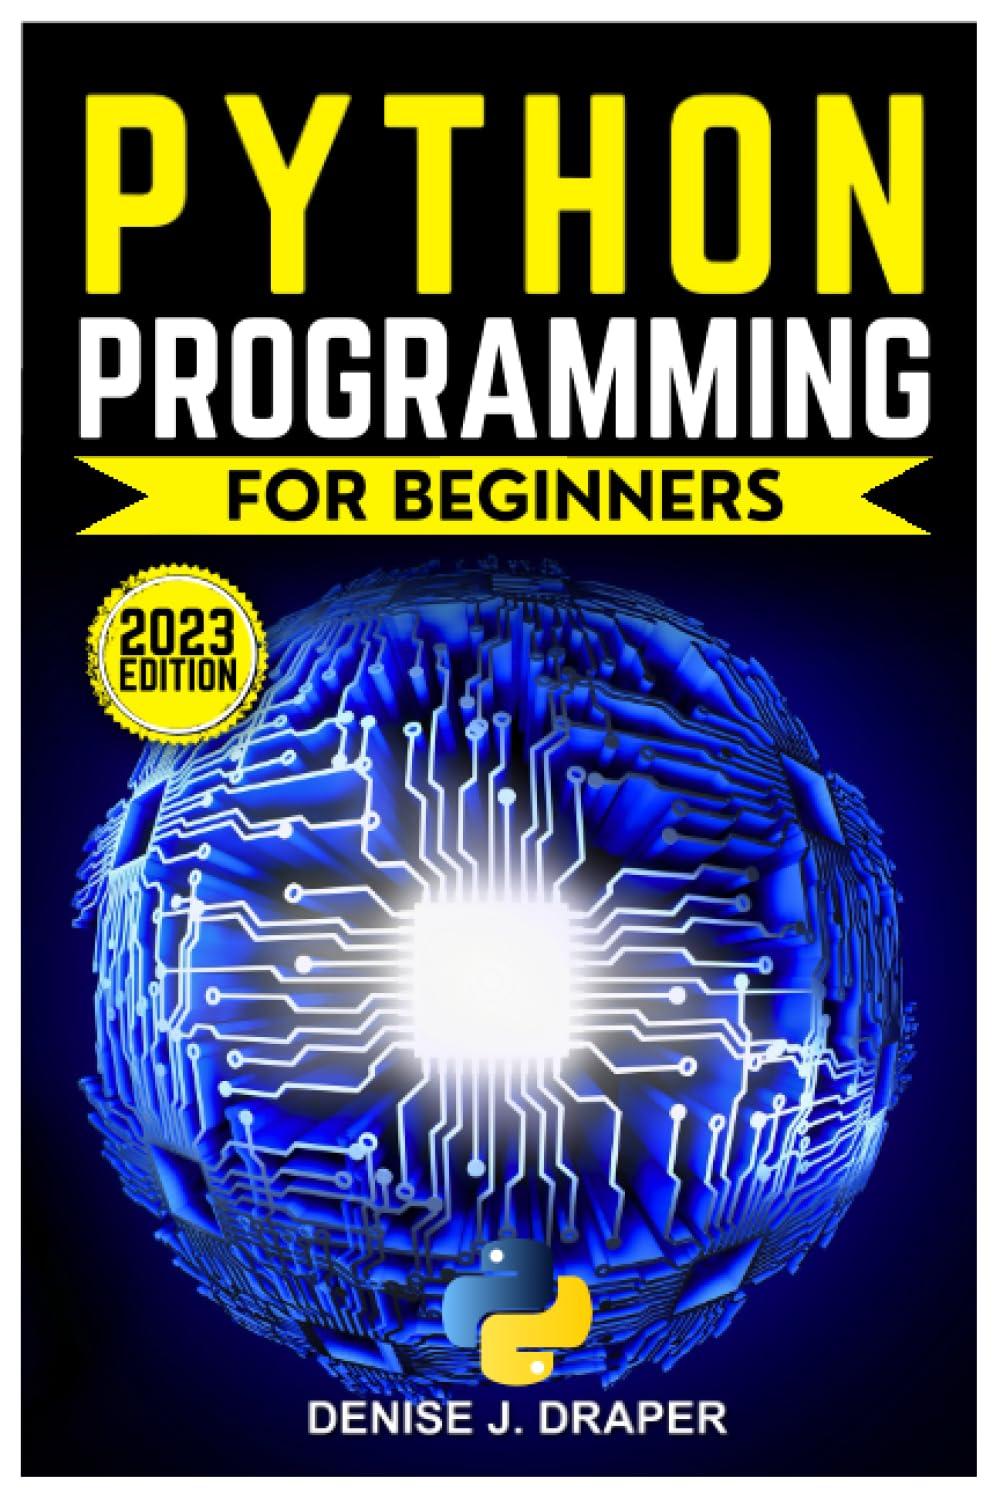 python programming for beginners 2023 edition denise j. draper b0c9s8p1gs, 979-8852424600